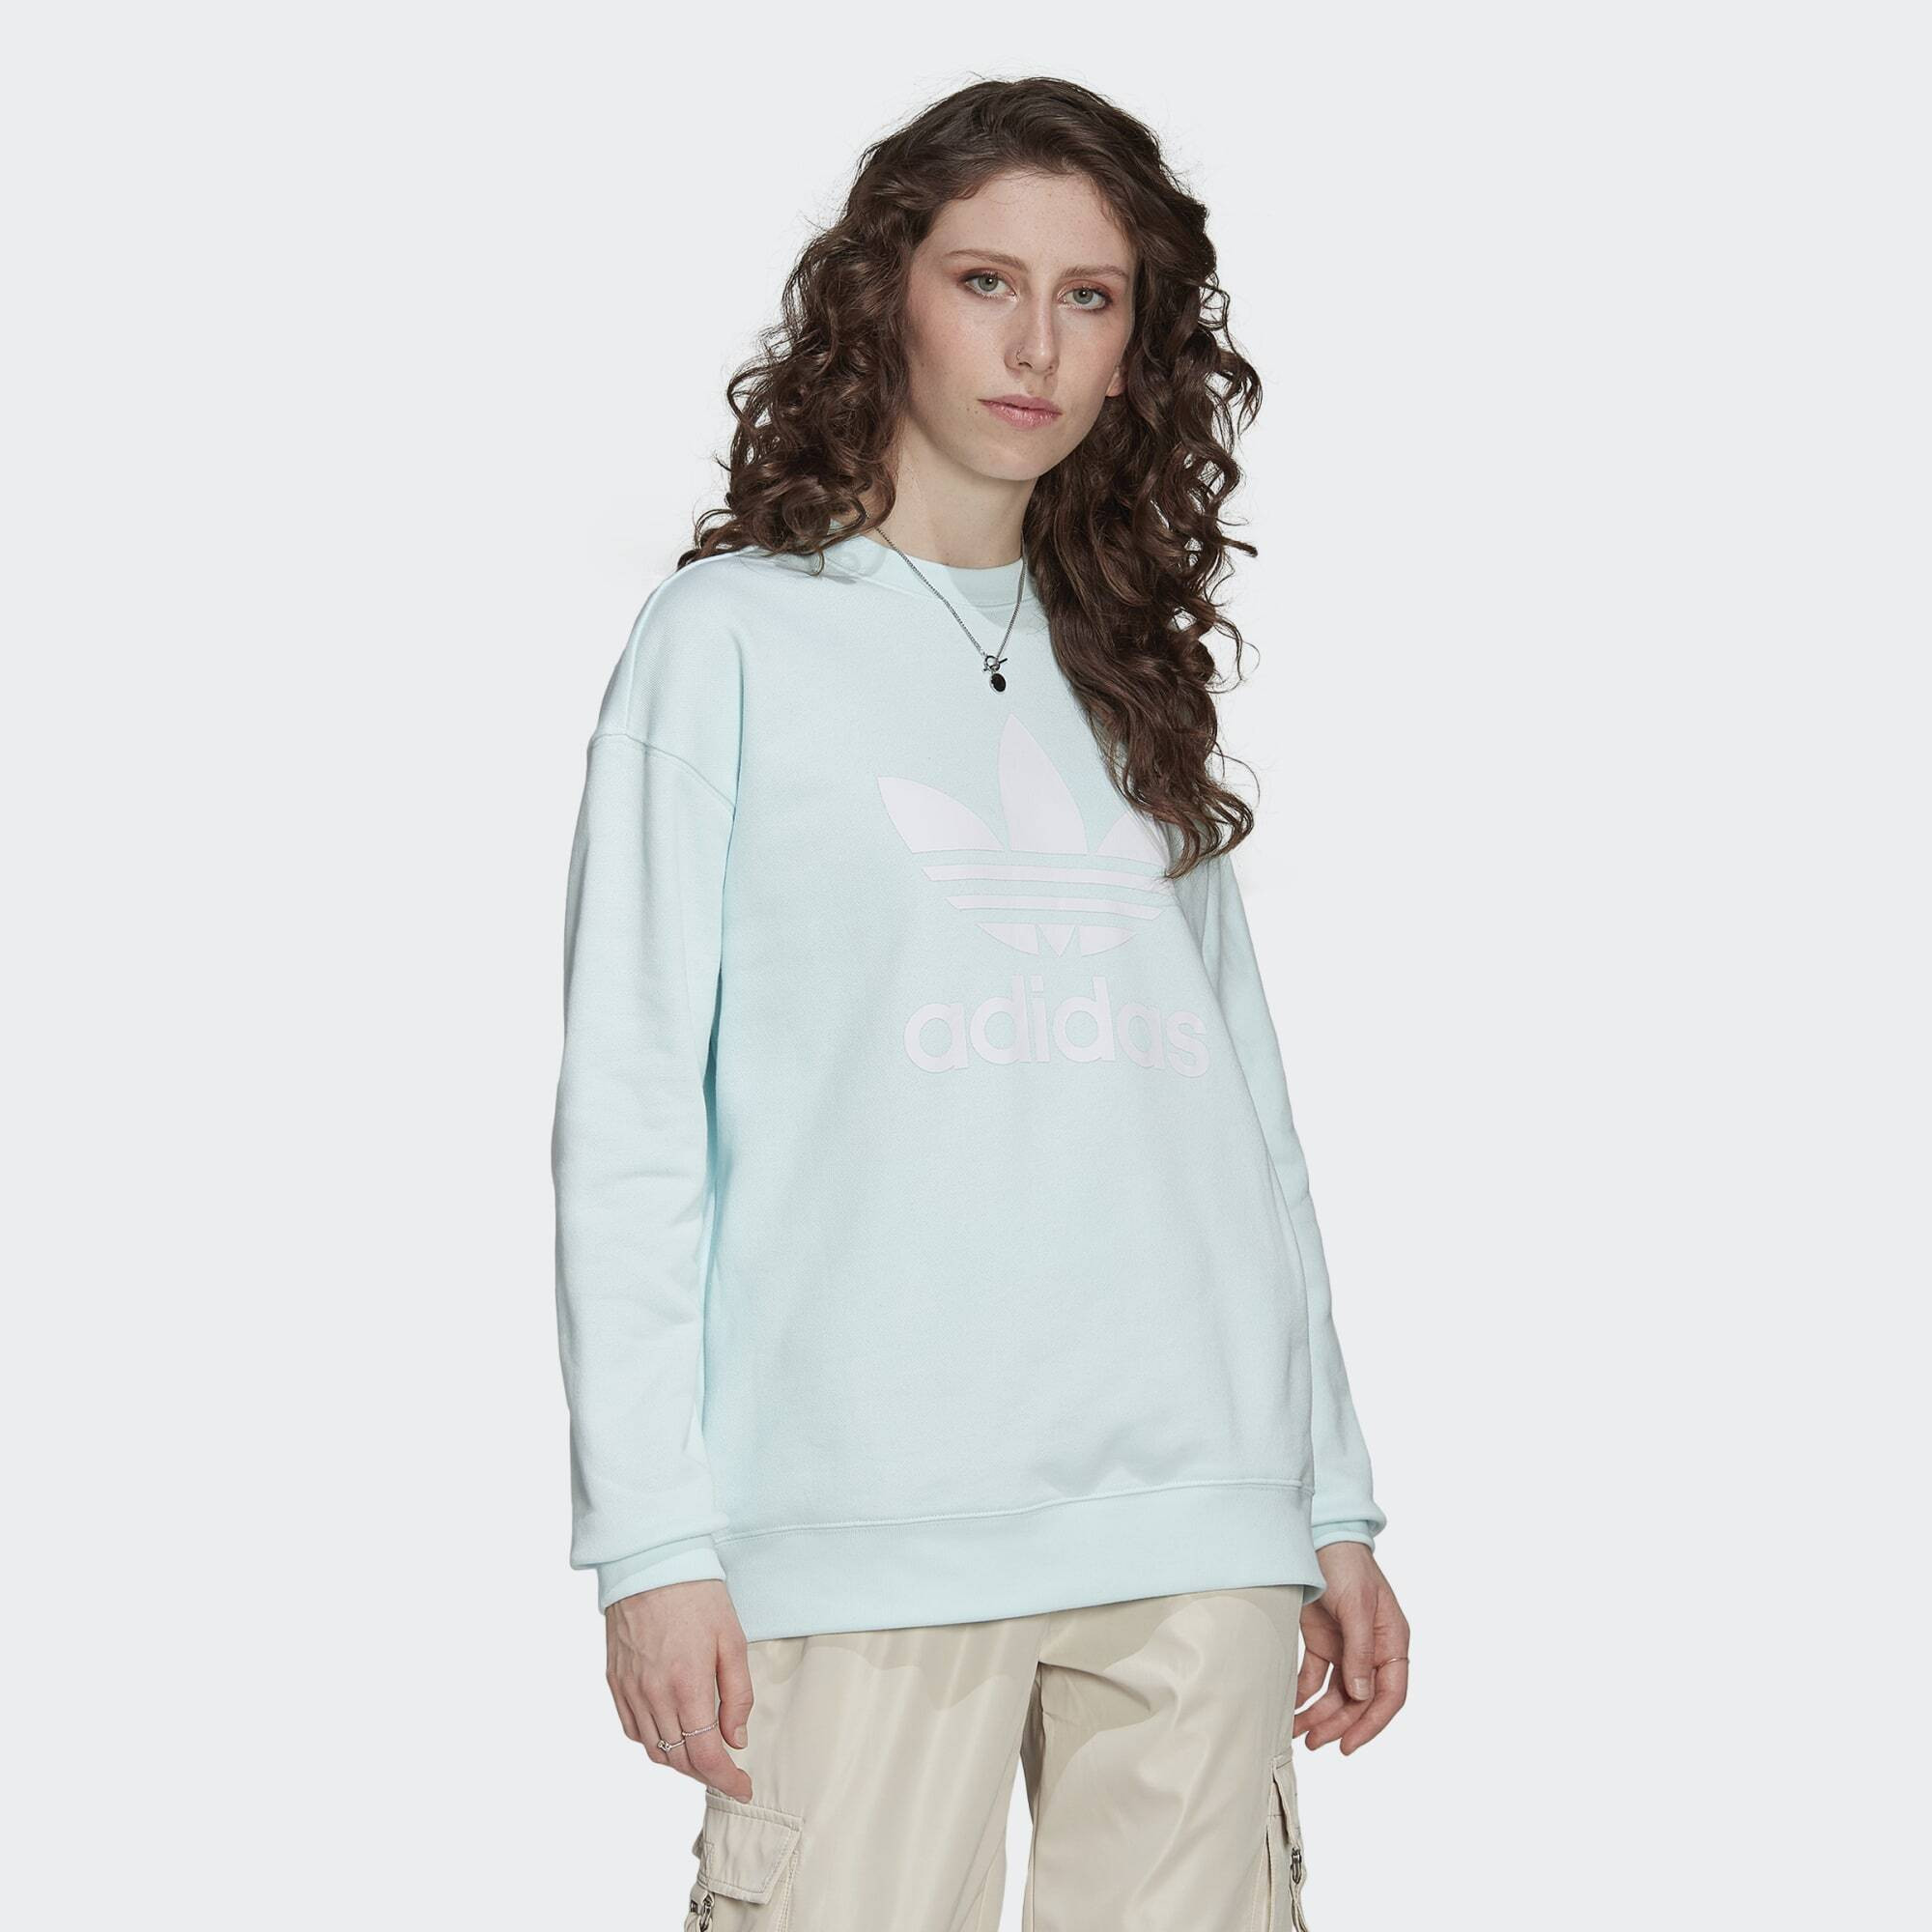 adidas Originals Trefoil Crew Sweatshirt (9000121205_3024)